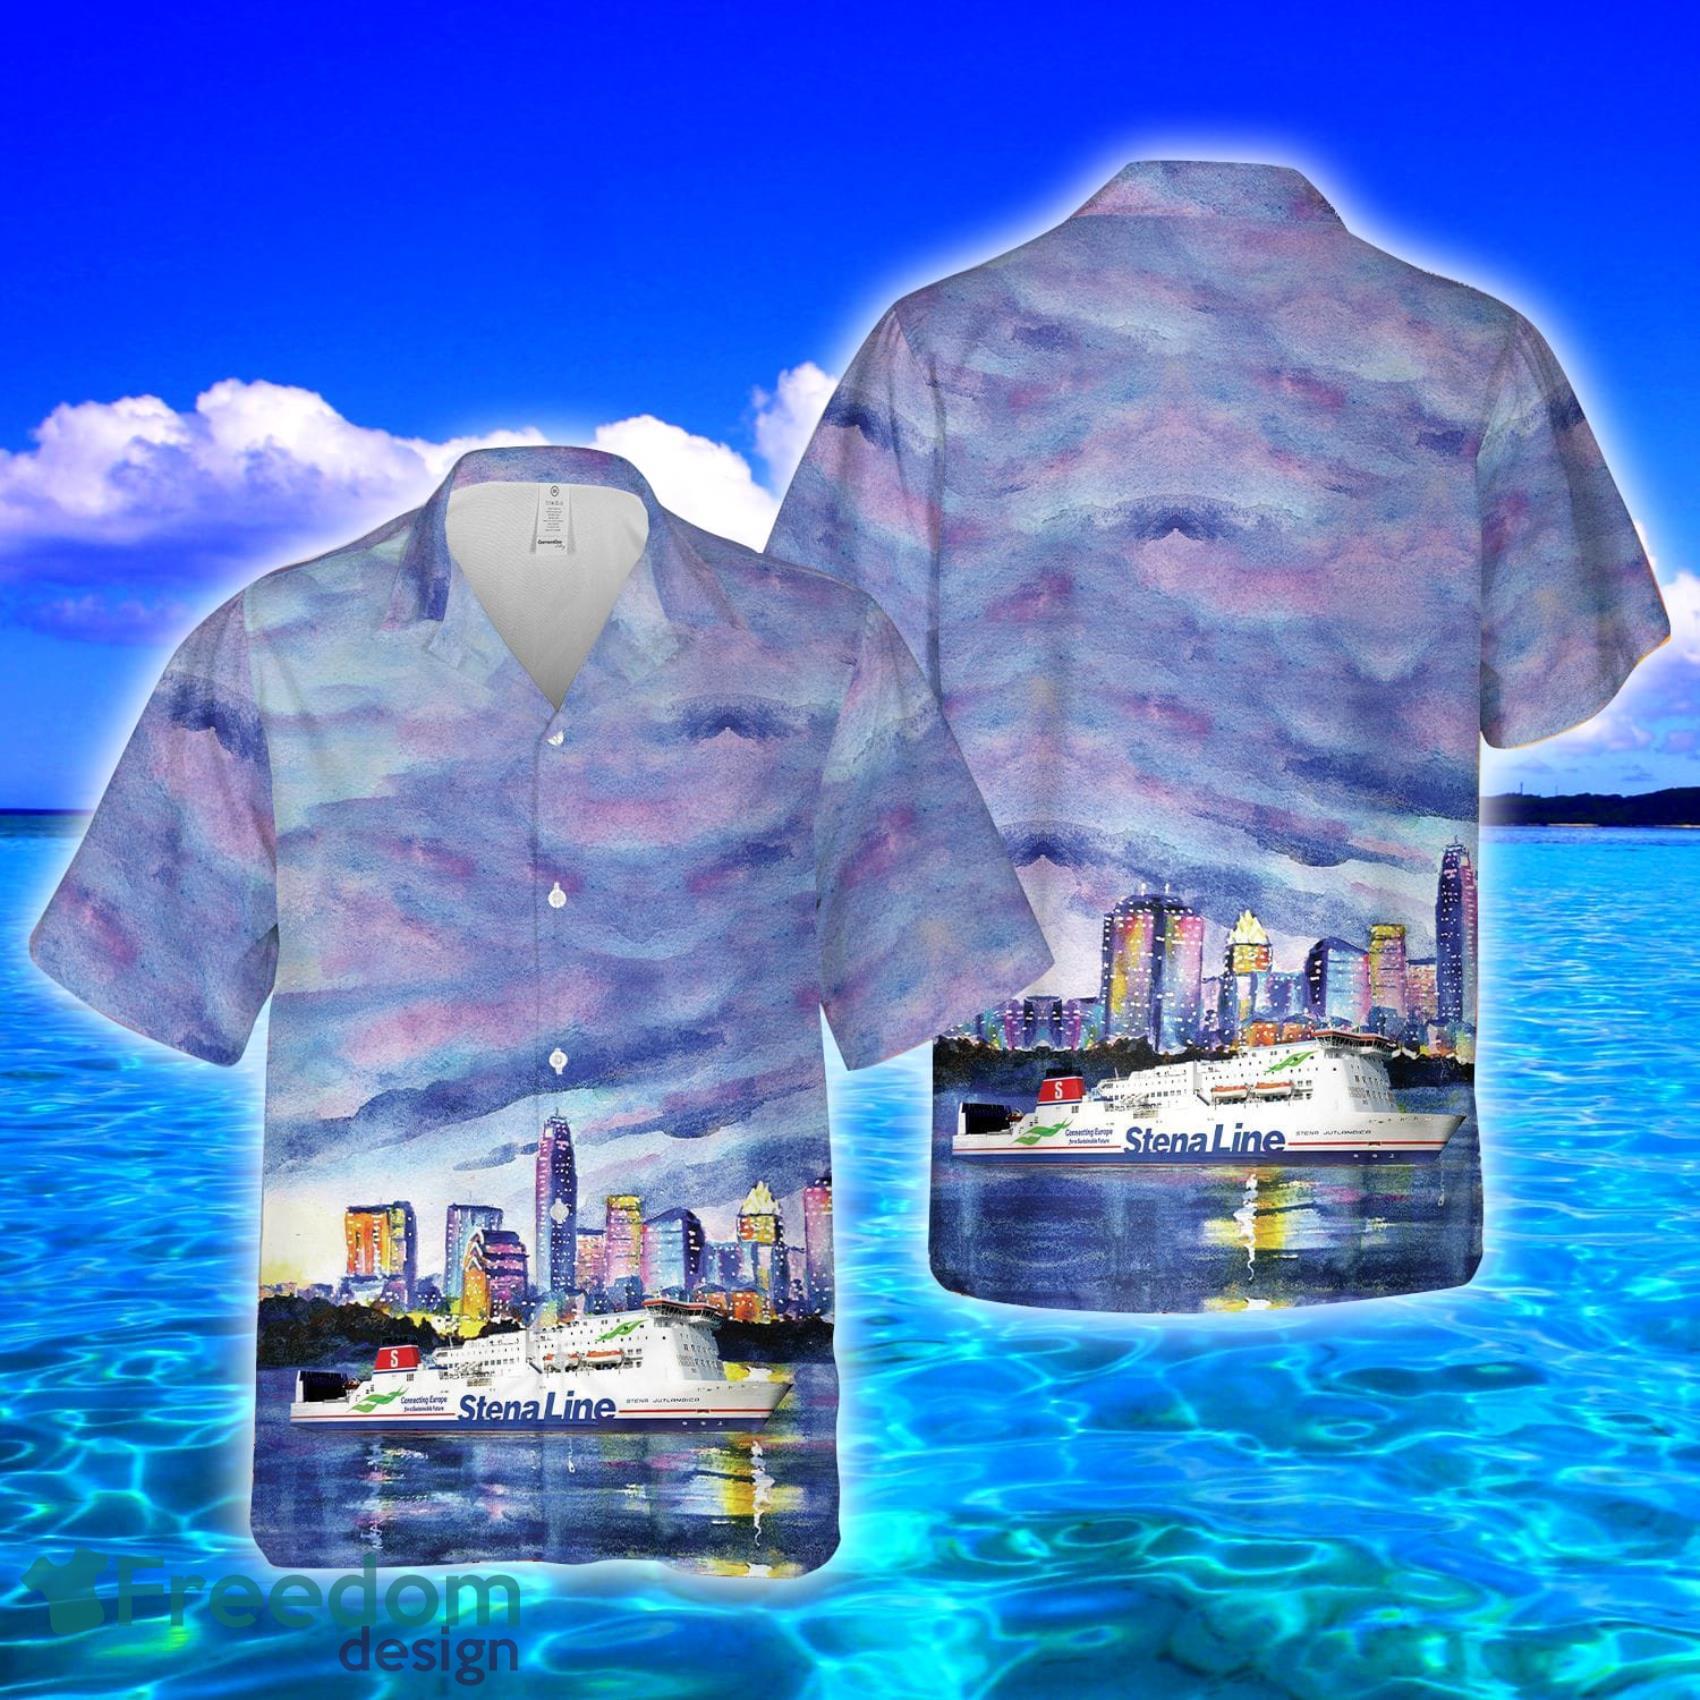 Vancouver Canucks Hawaiian Shorts and Shirt Summer Beach Shirt Full Over  Print - Freedomdesign